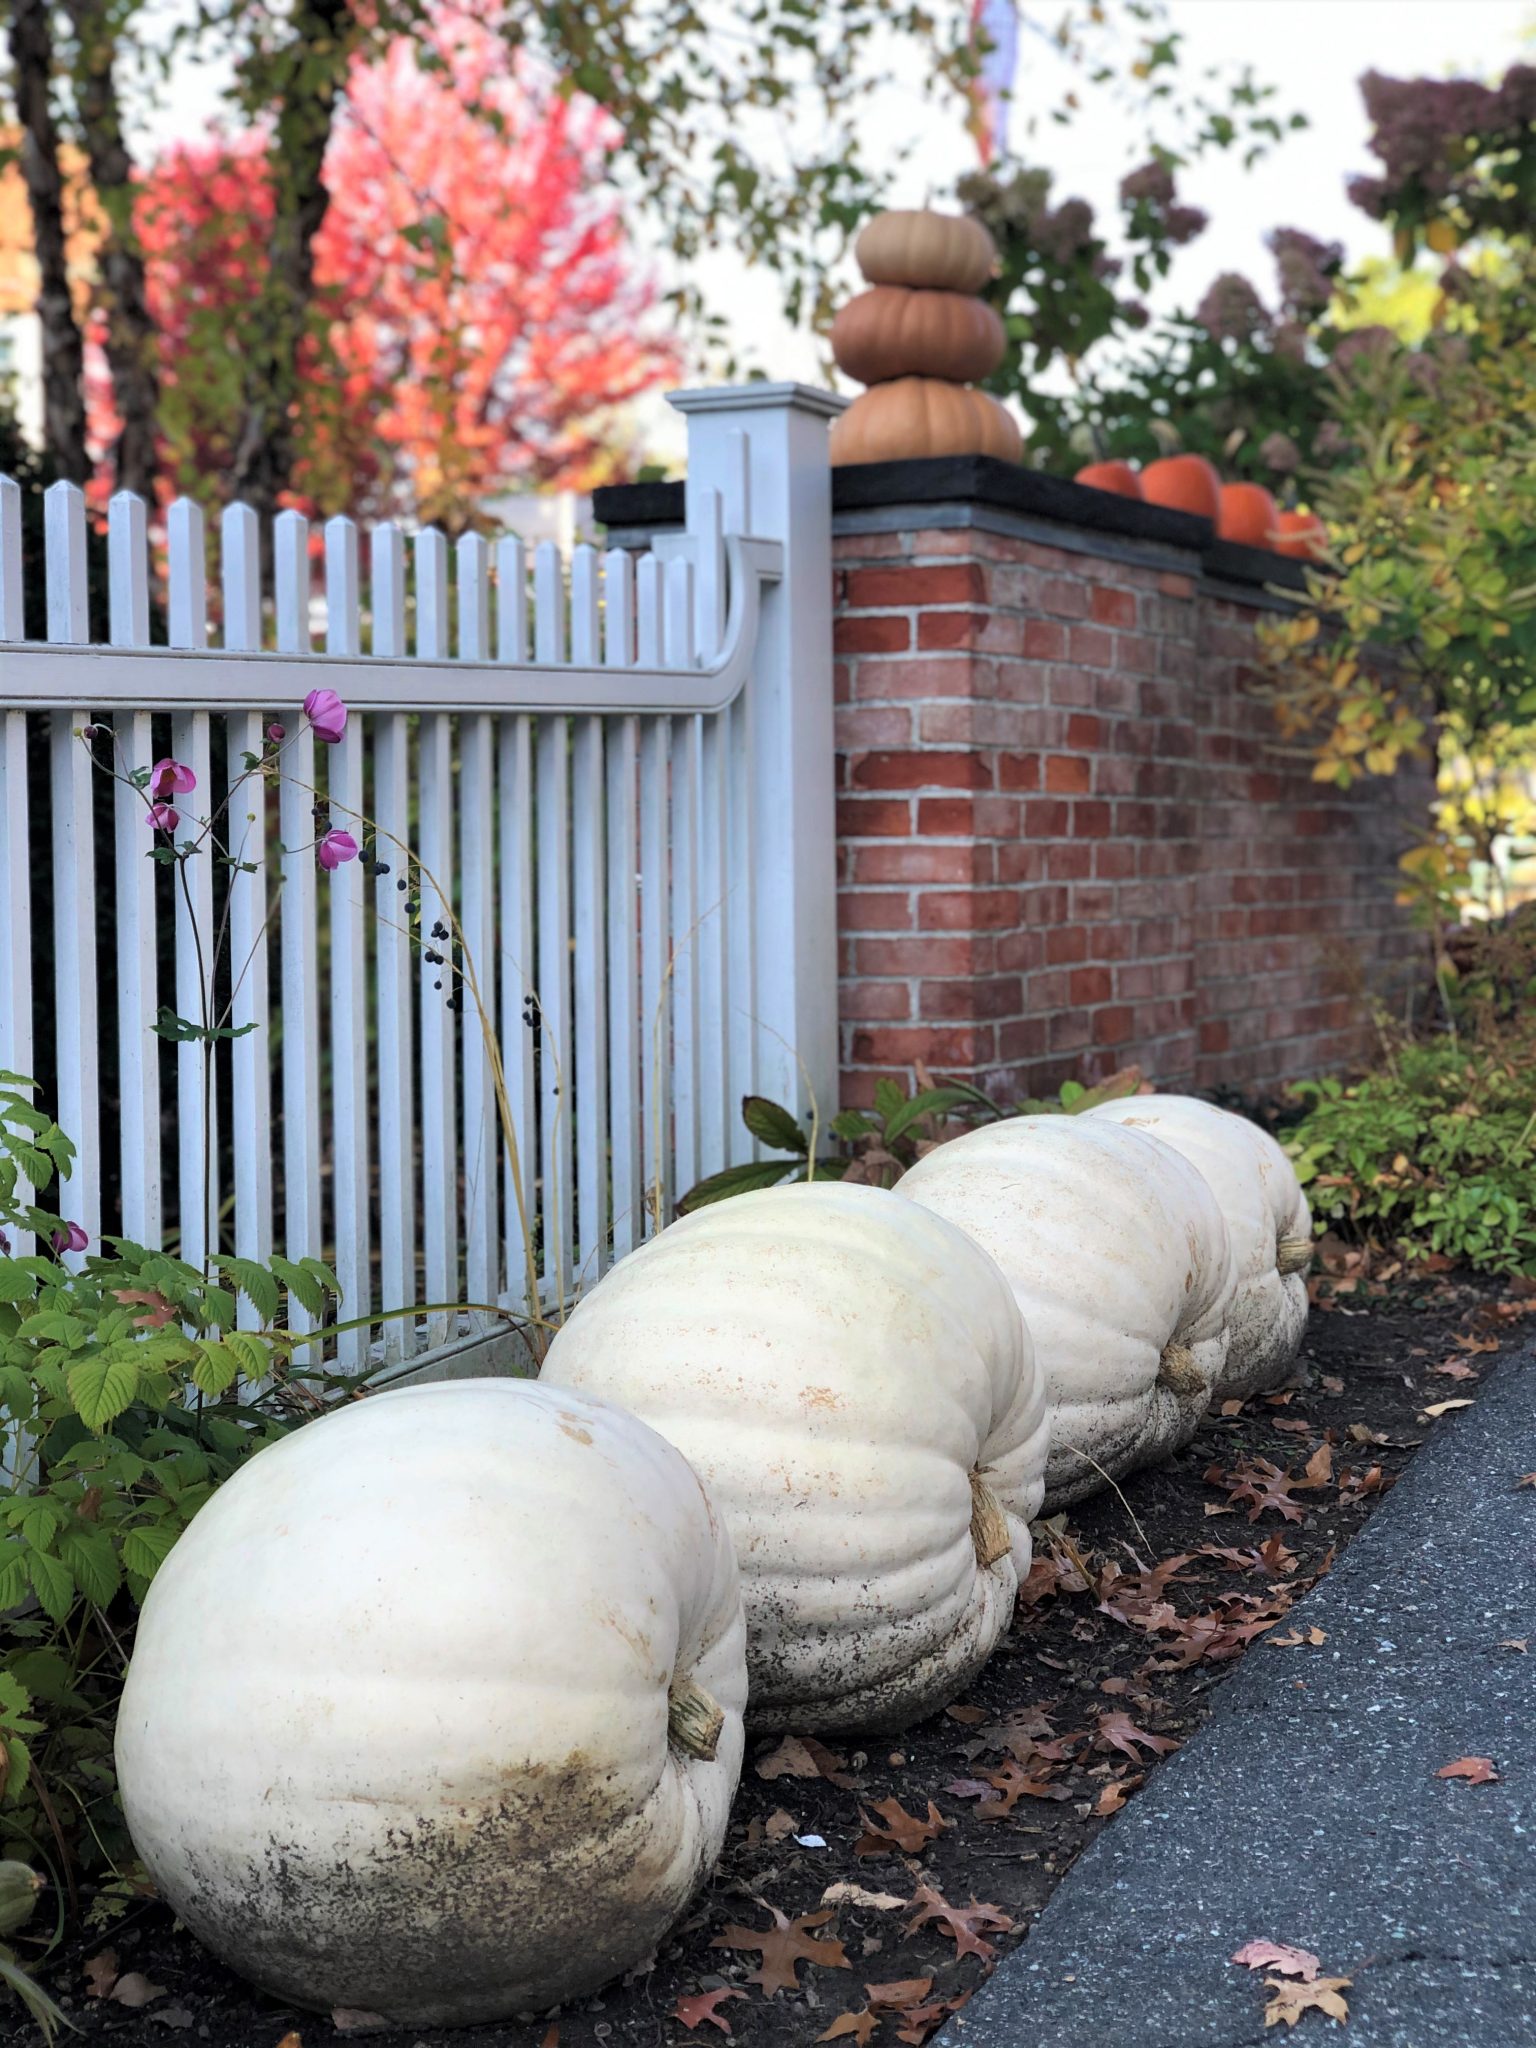 White pumpkins along a fence line